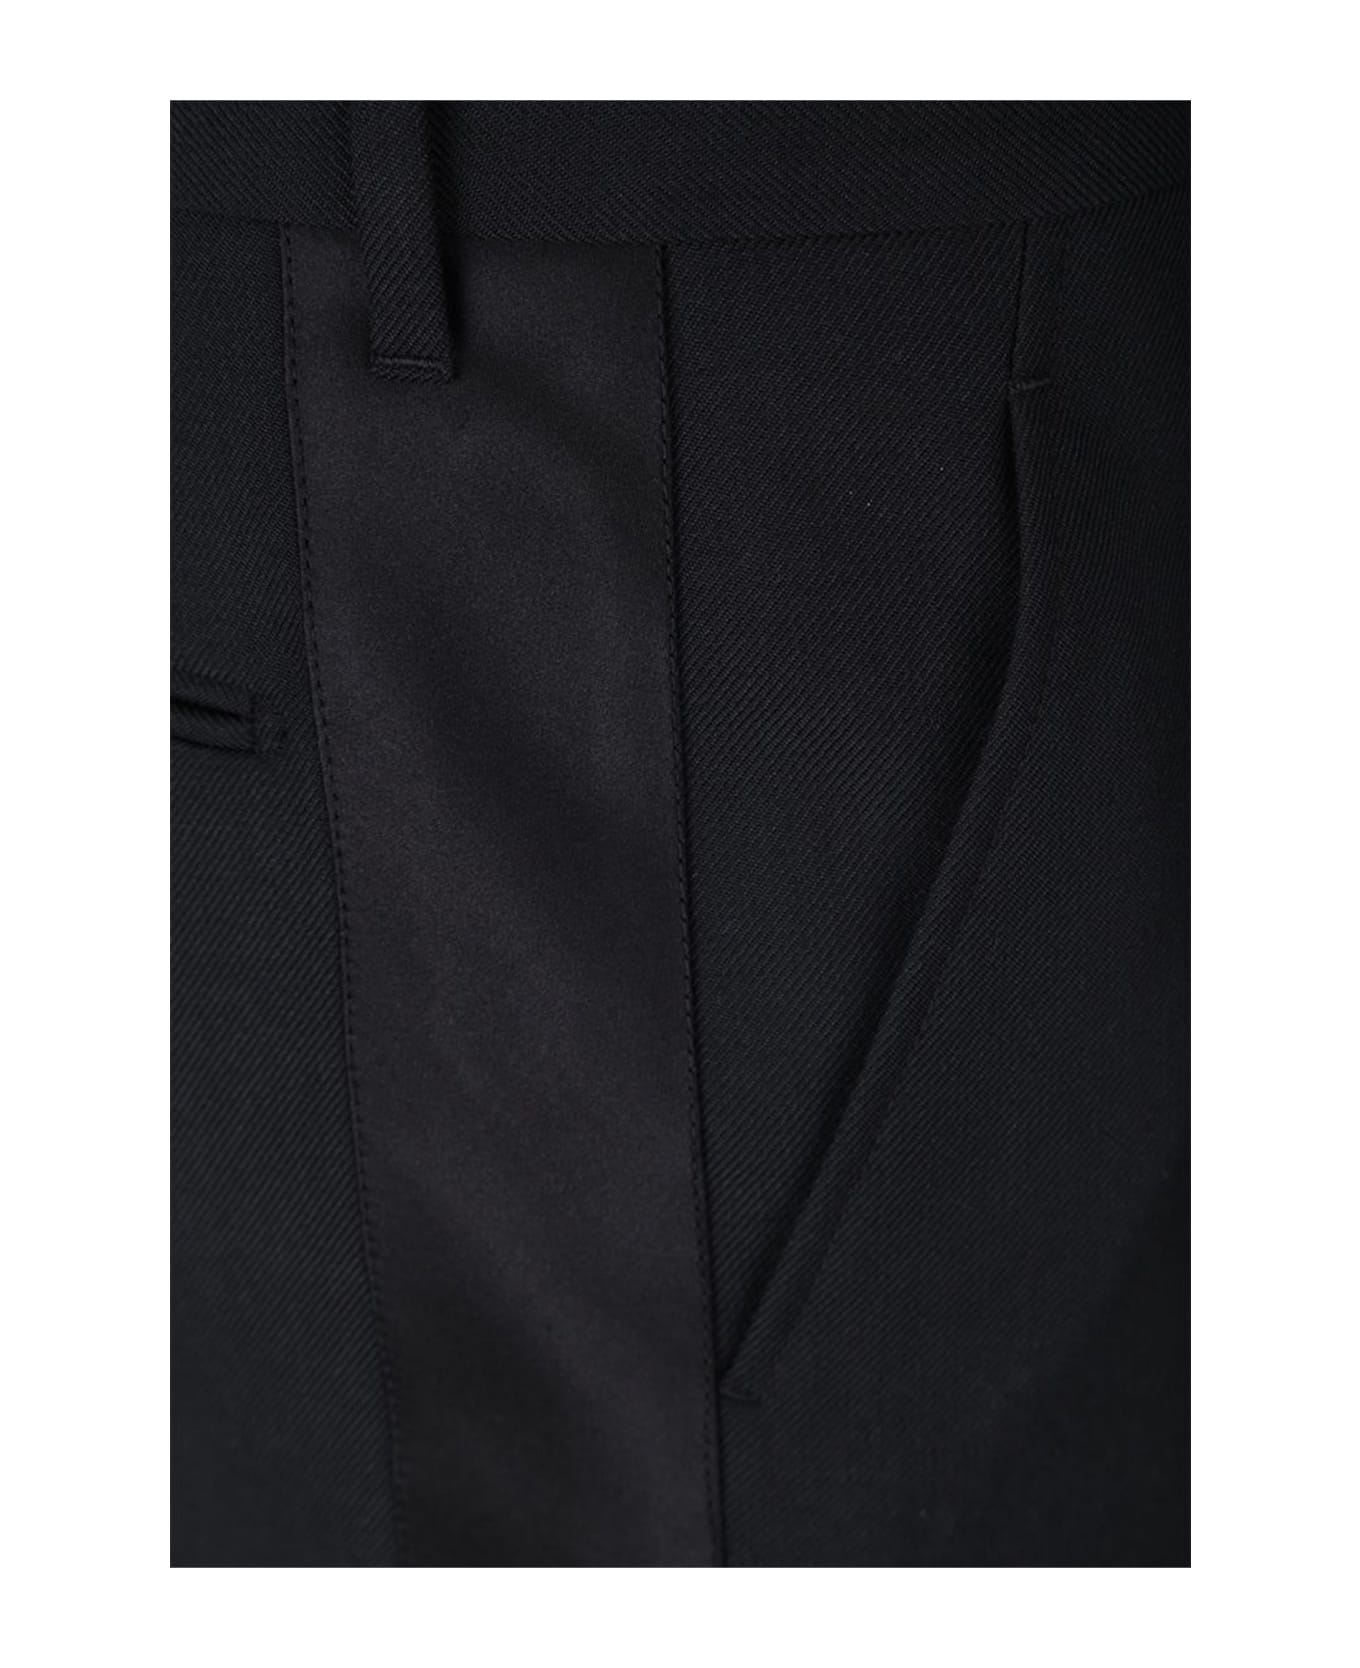 Prada Wool Pants - Black